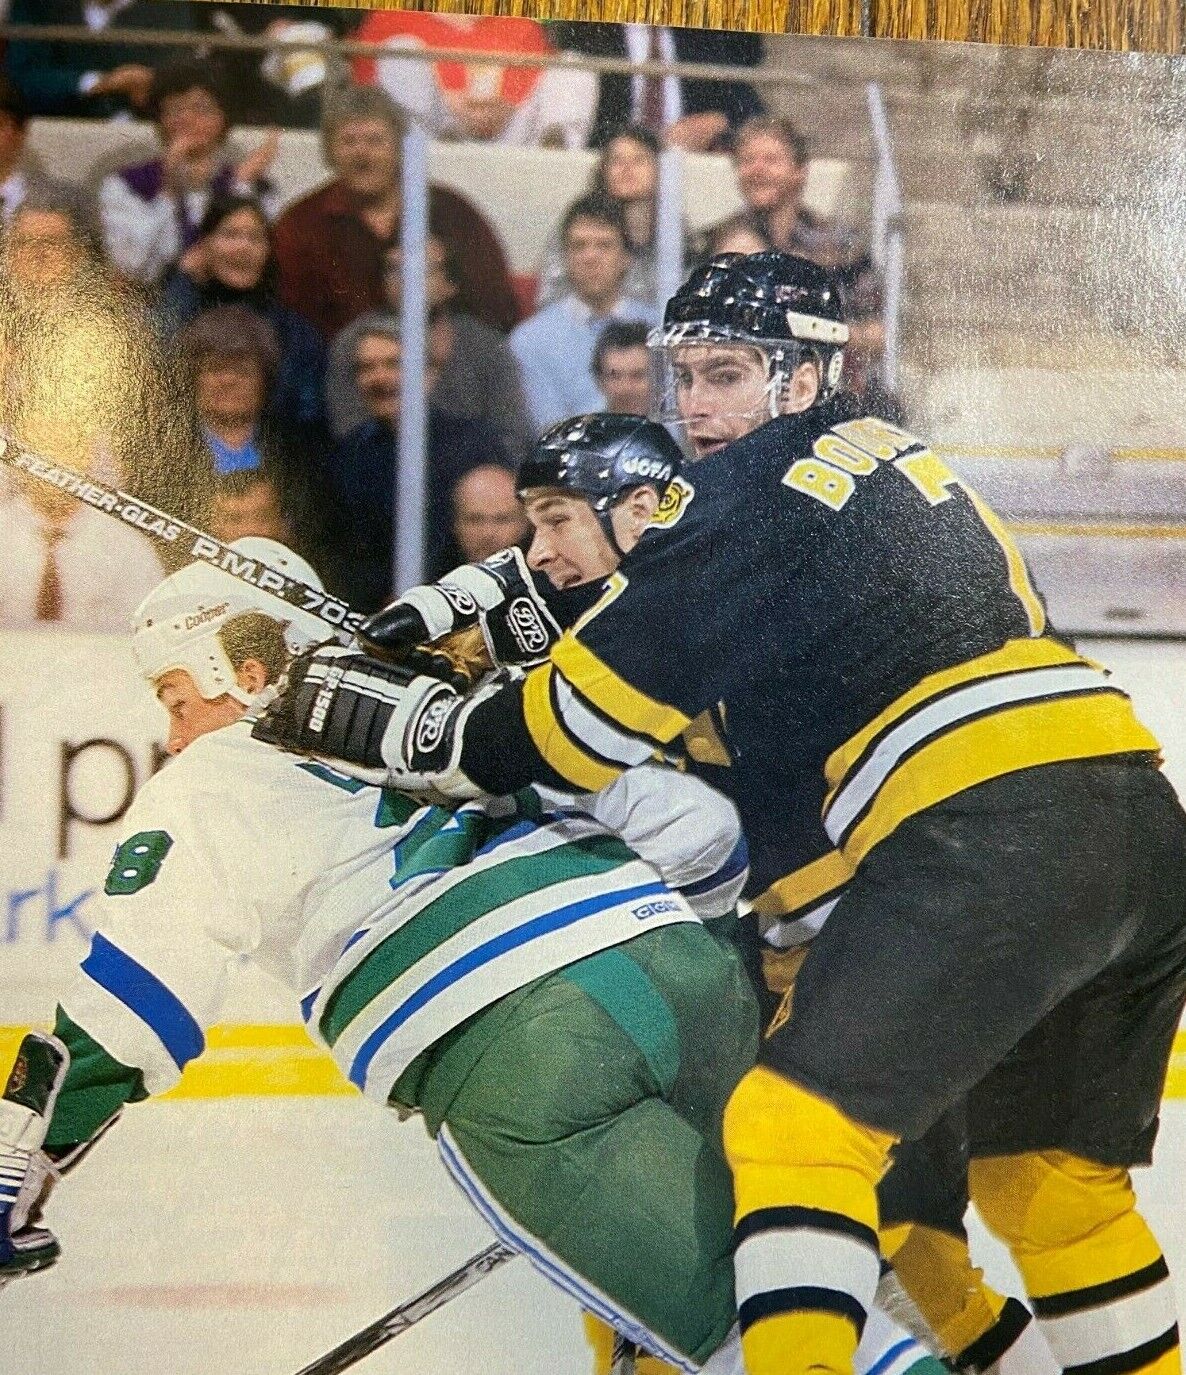 1987 Ray Bourque Boston Bruins Hockey Player